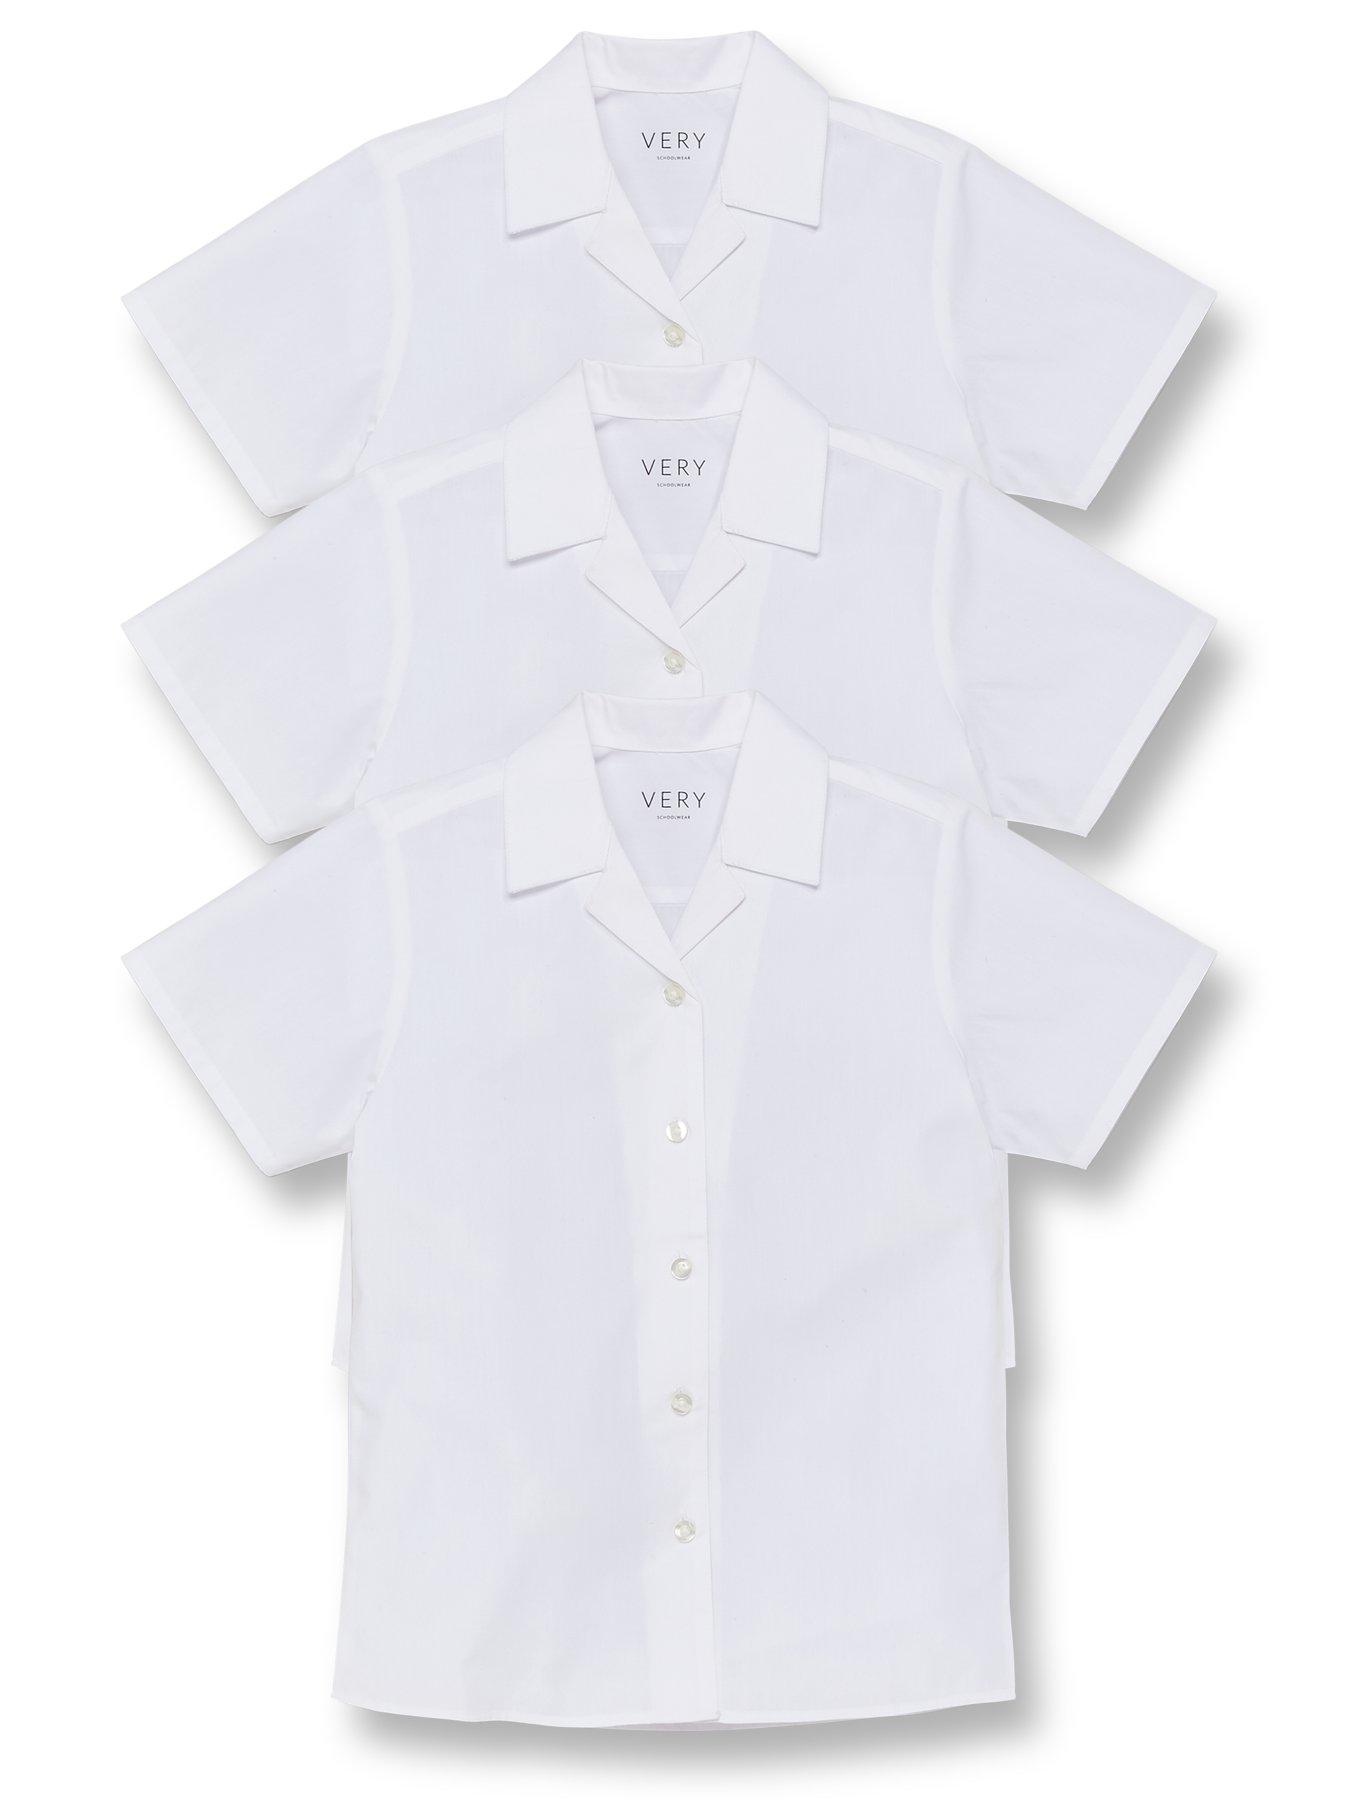 Details about   Men's Fashion Dress Shirts Cotton Clend,two tone with pinstrip design Black 602 